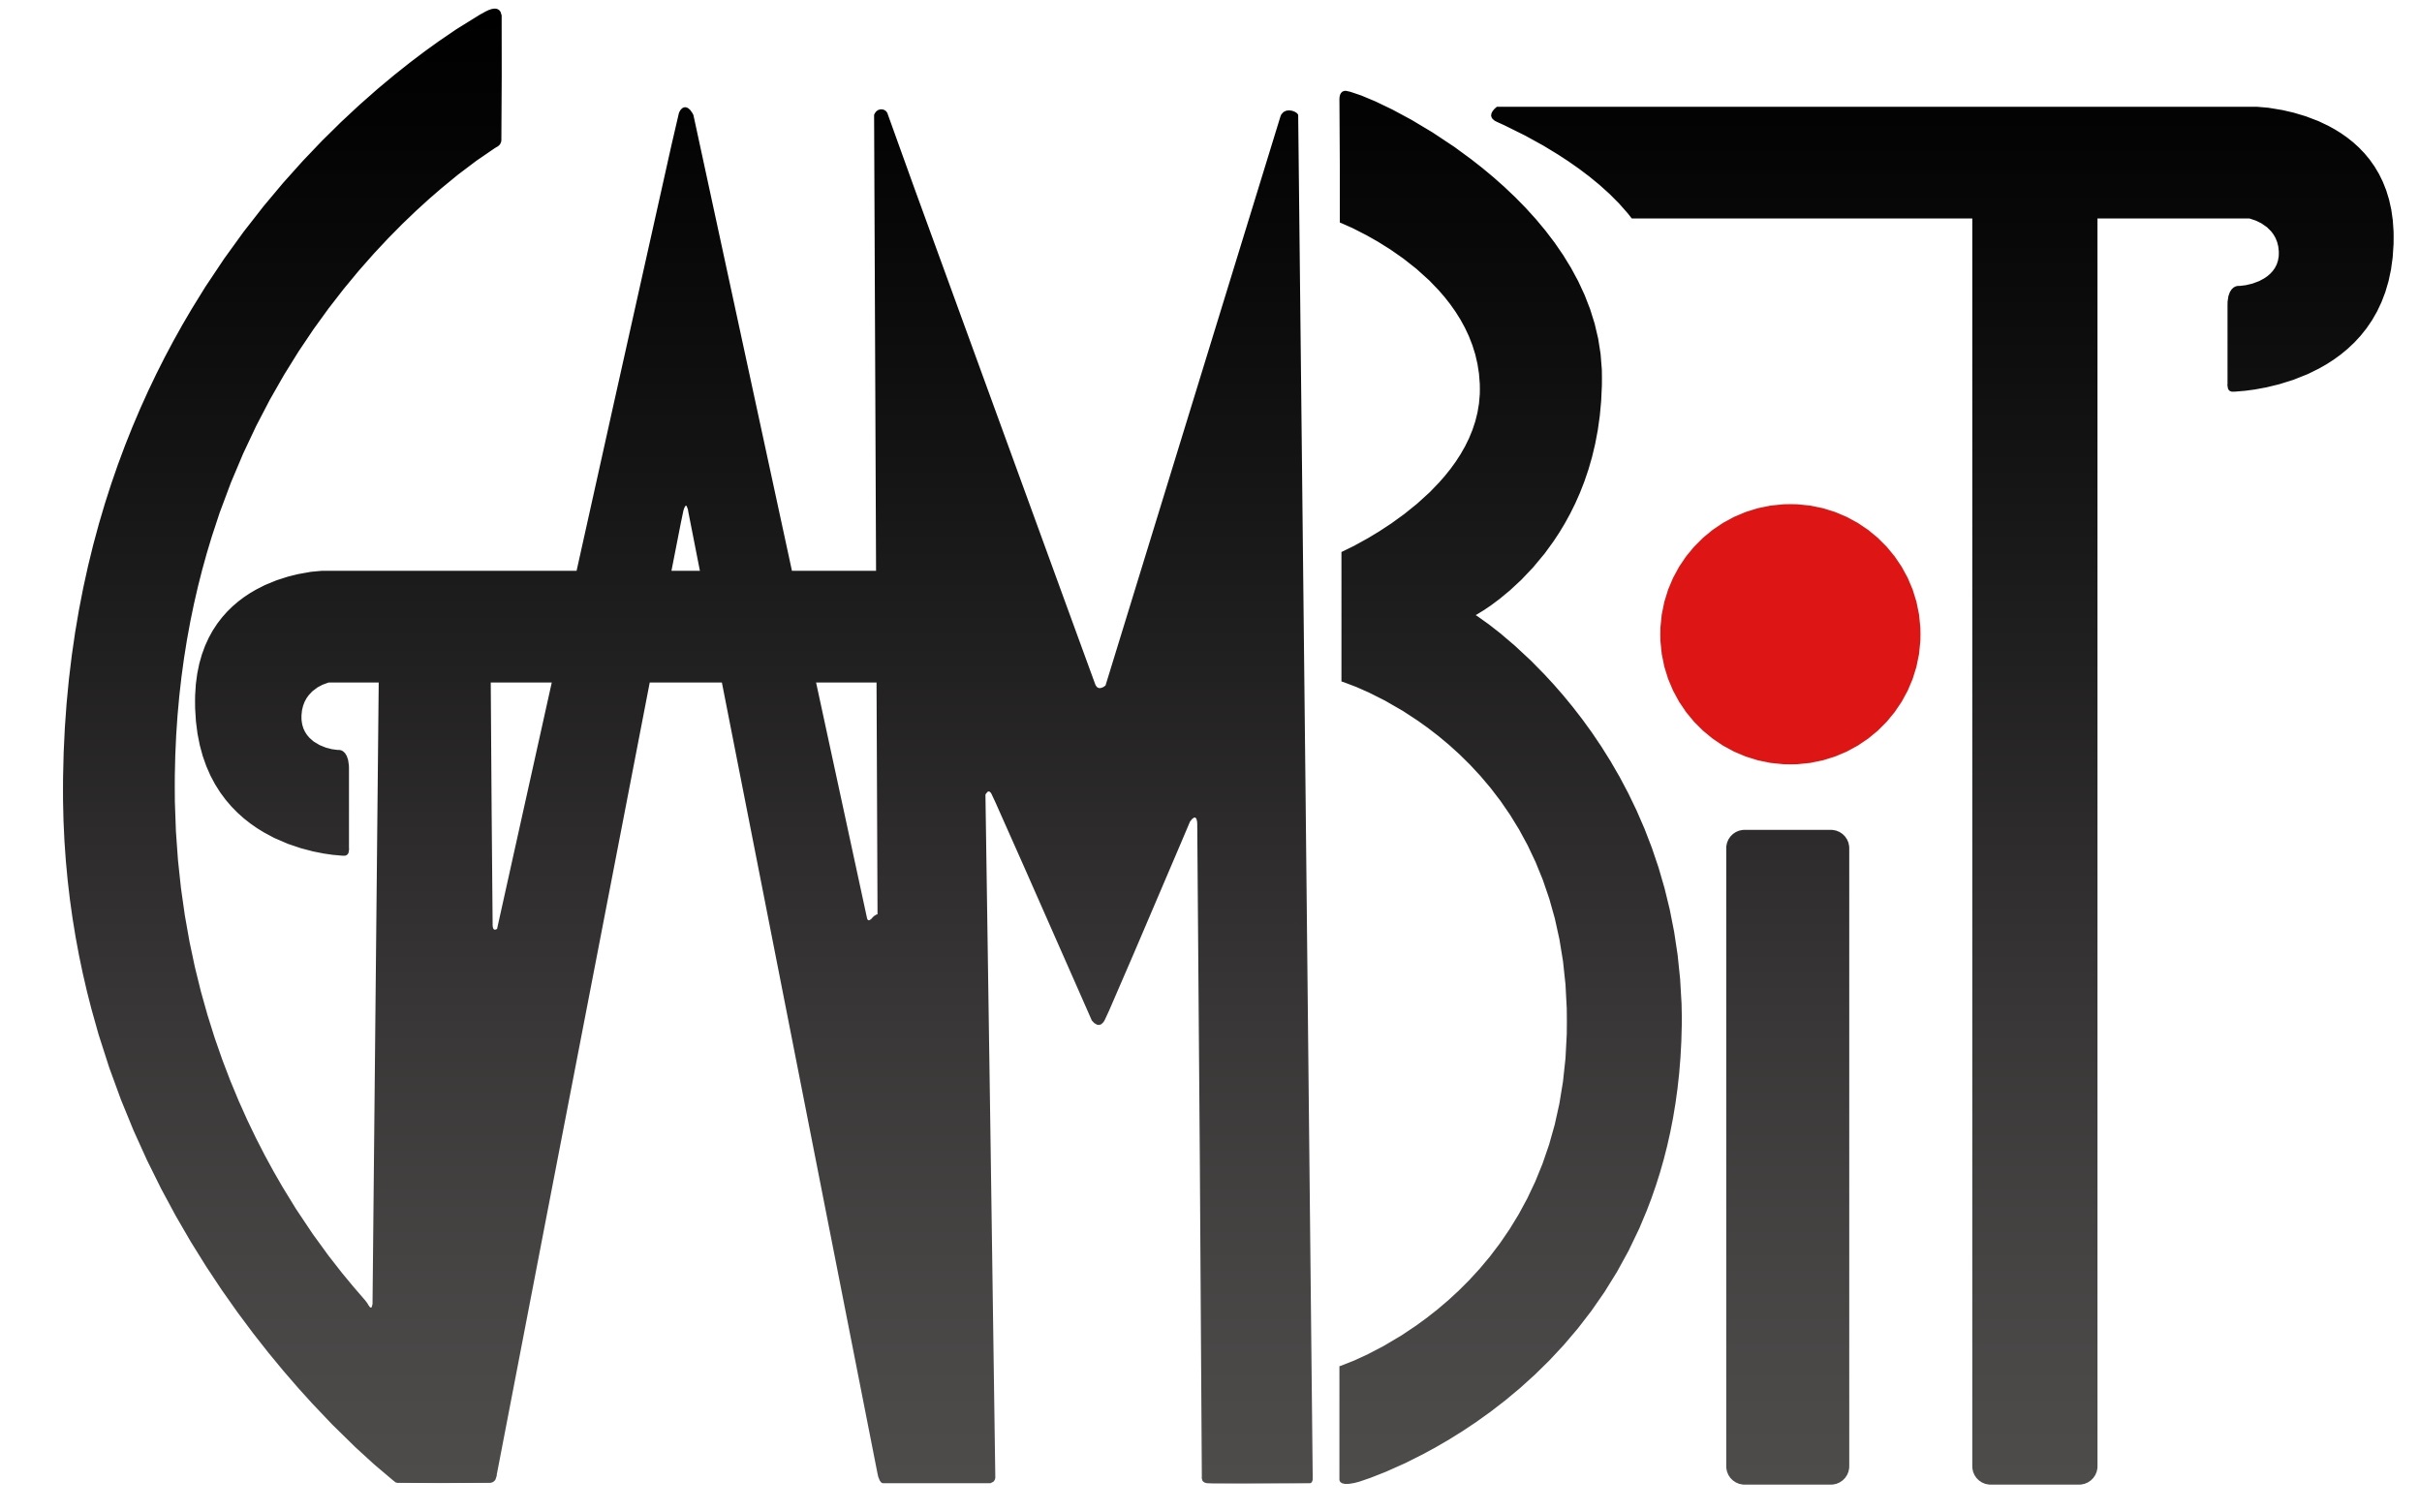 GAMBIT Logo.jpg 336c8c5596a7d6da0114e99aaeabaf56